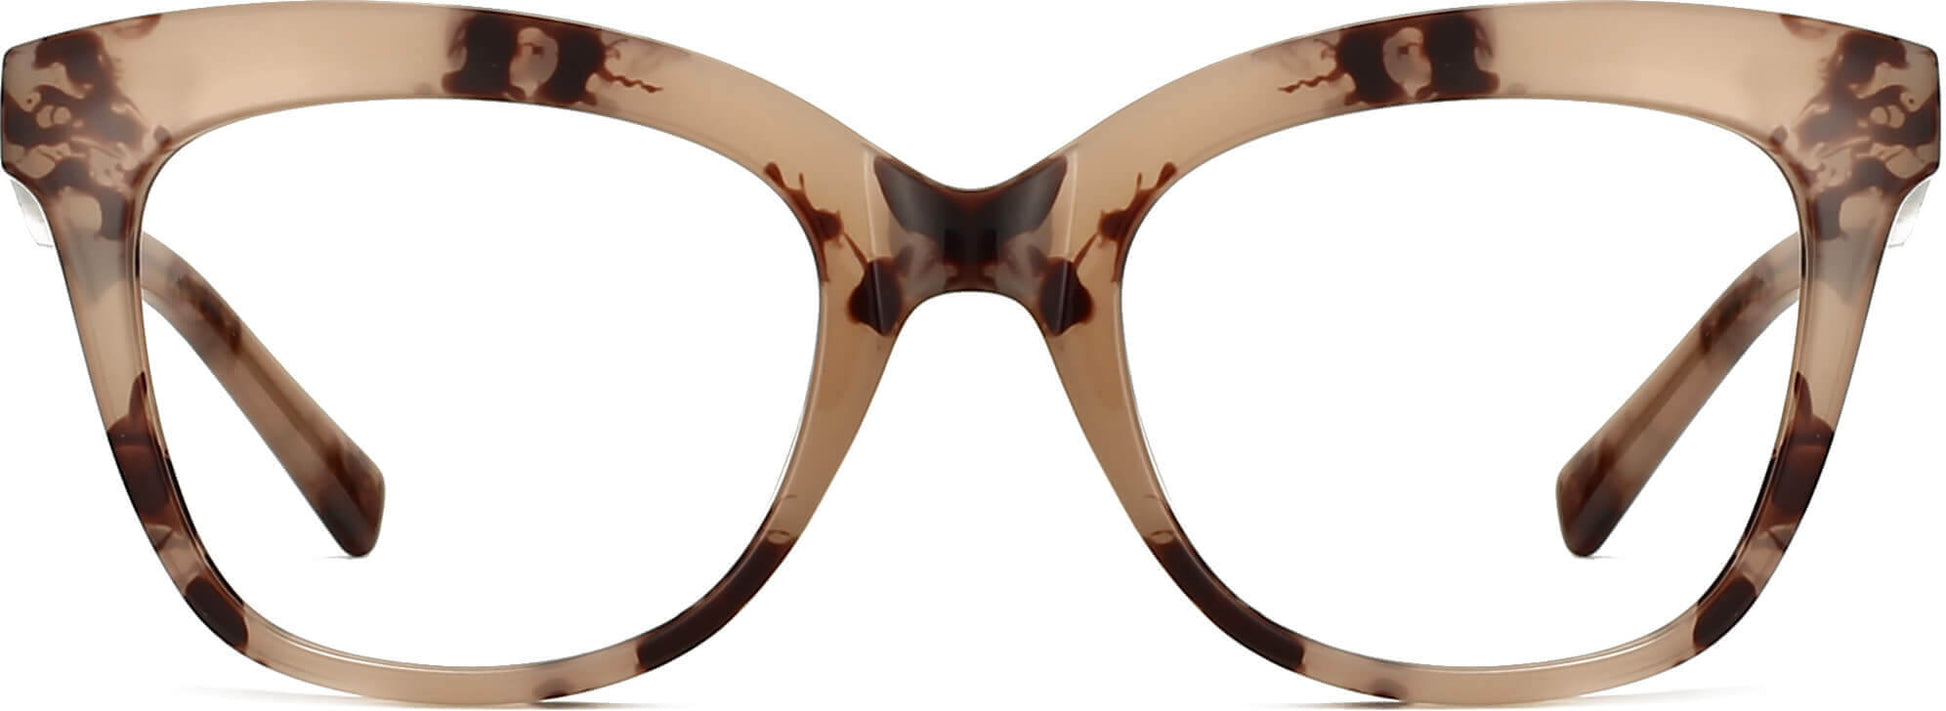 Rita Cateye Tortoise Eyeglasses from ANRRI, front view